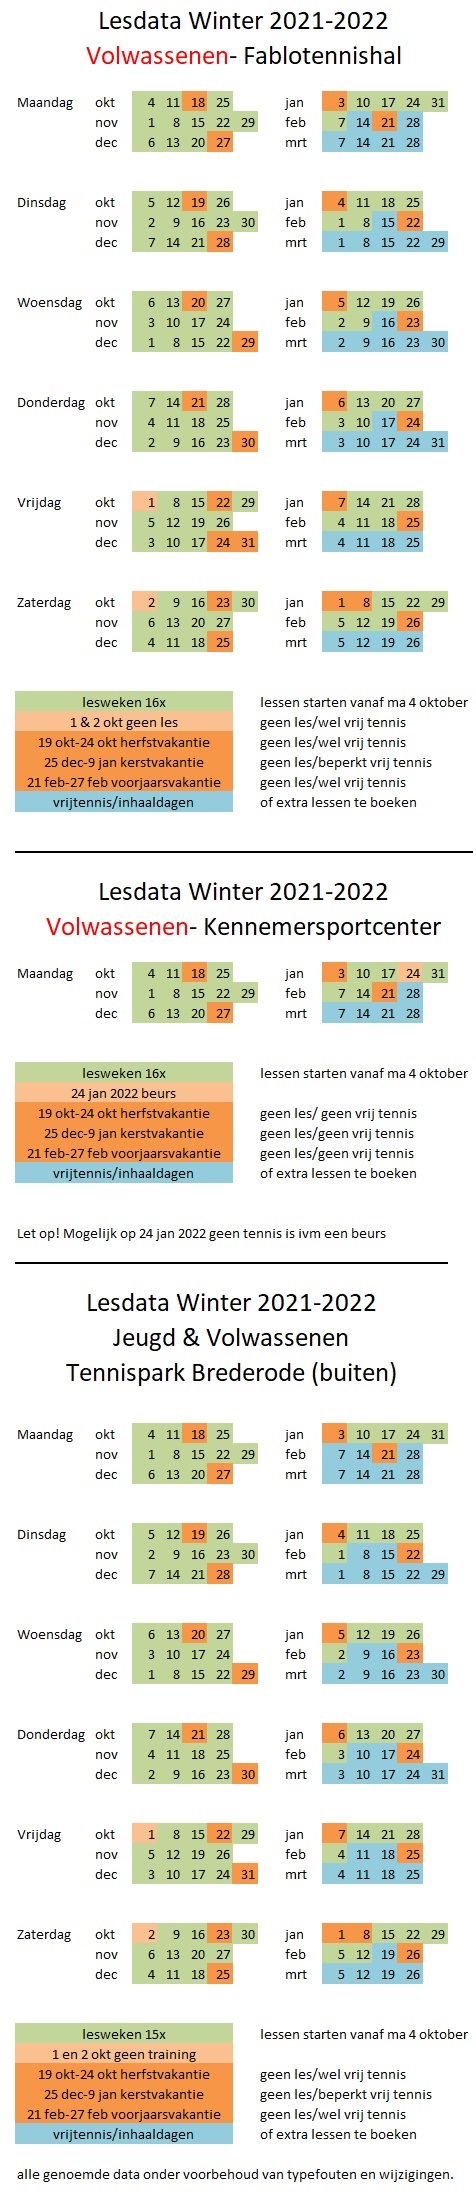 lesdata winter 2021-2022